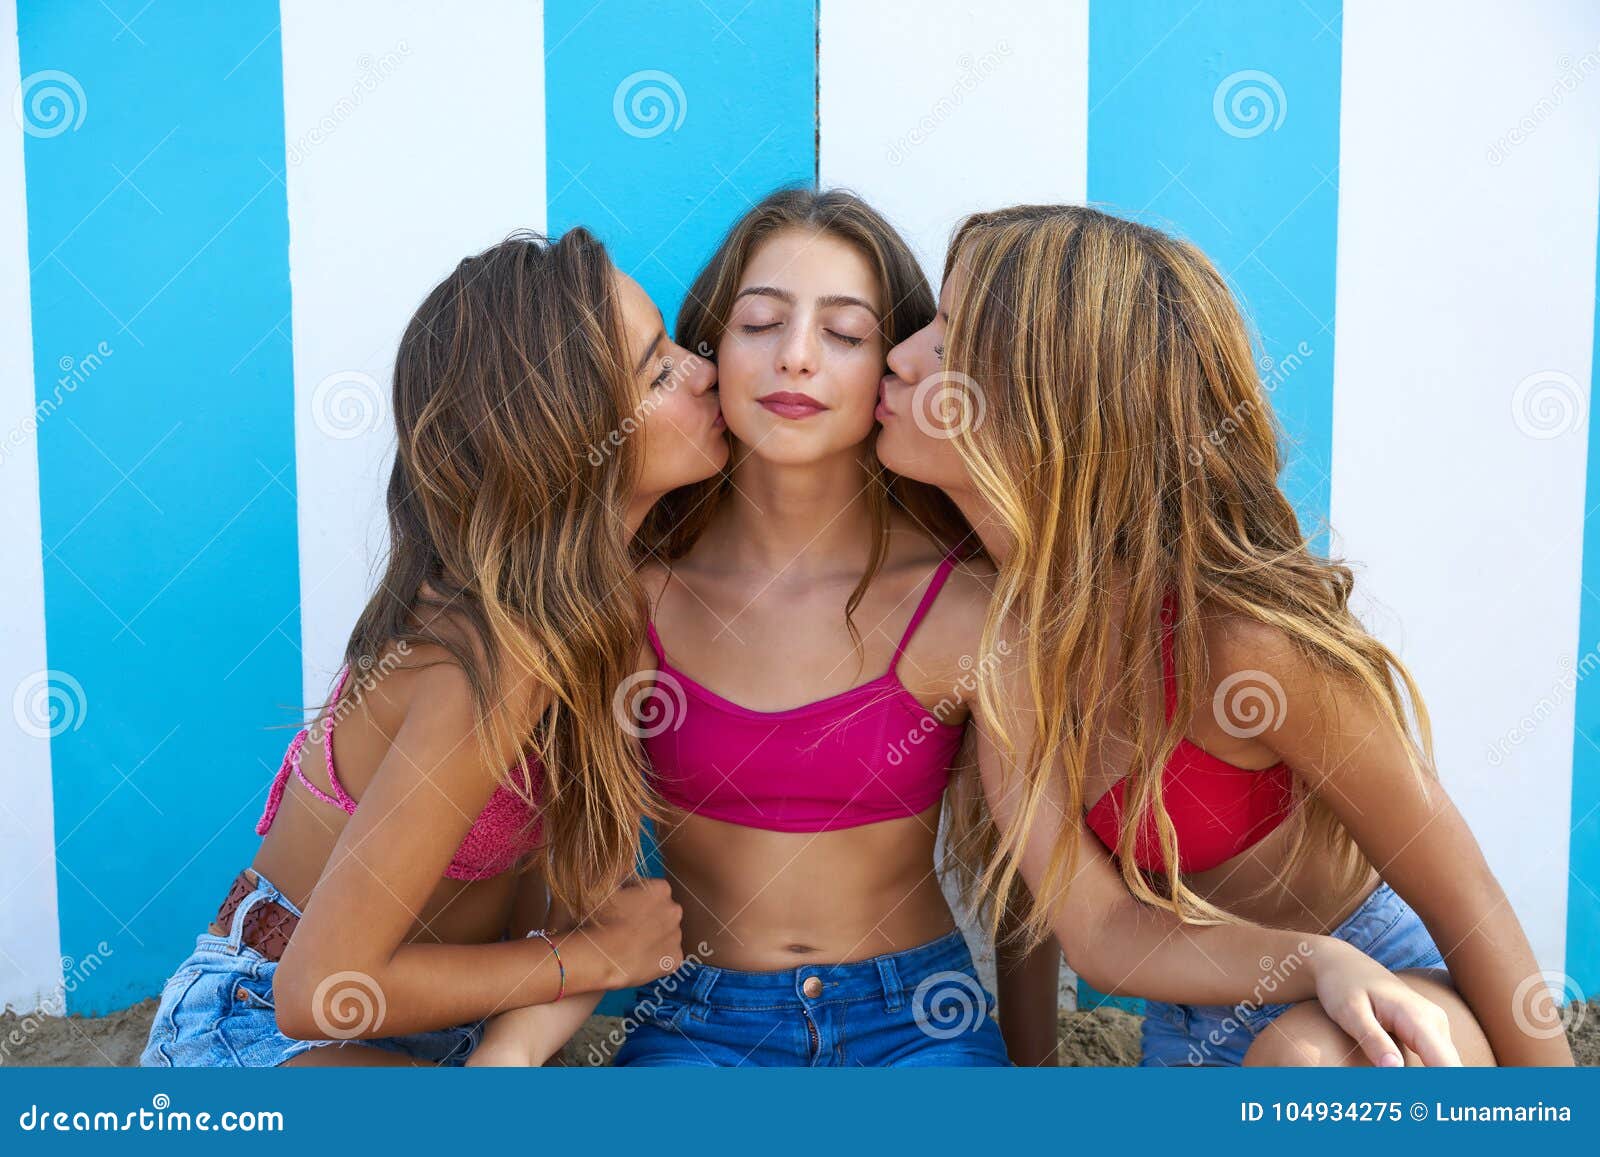 self shot girls kissing sexy video pics